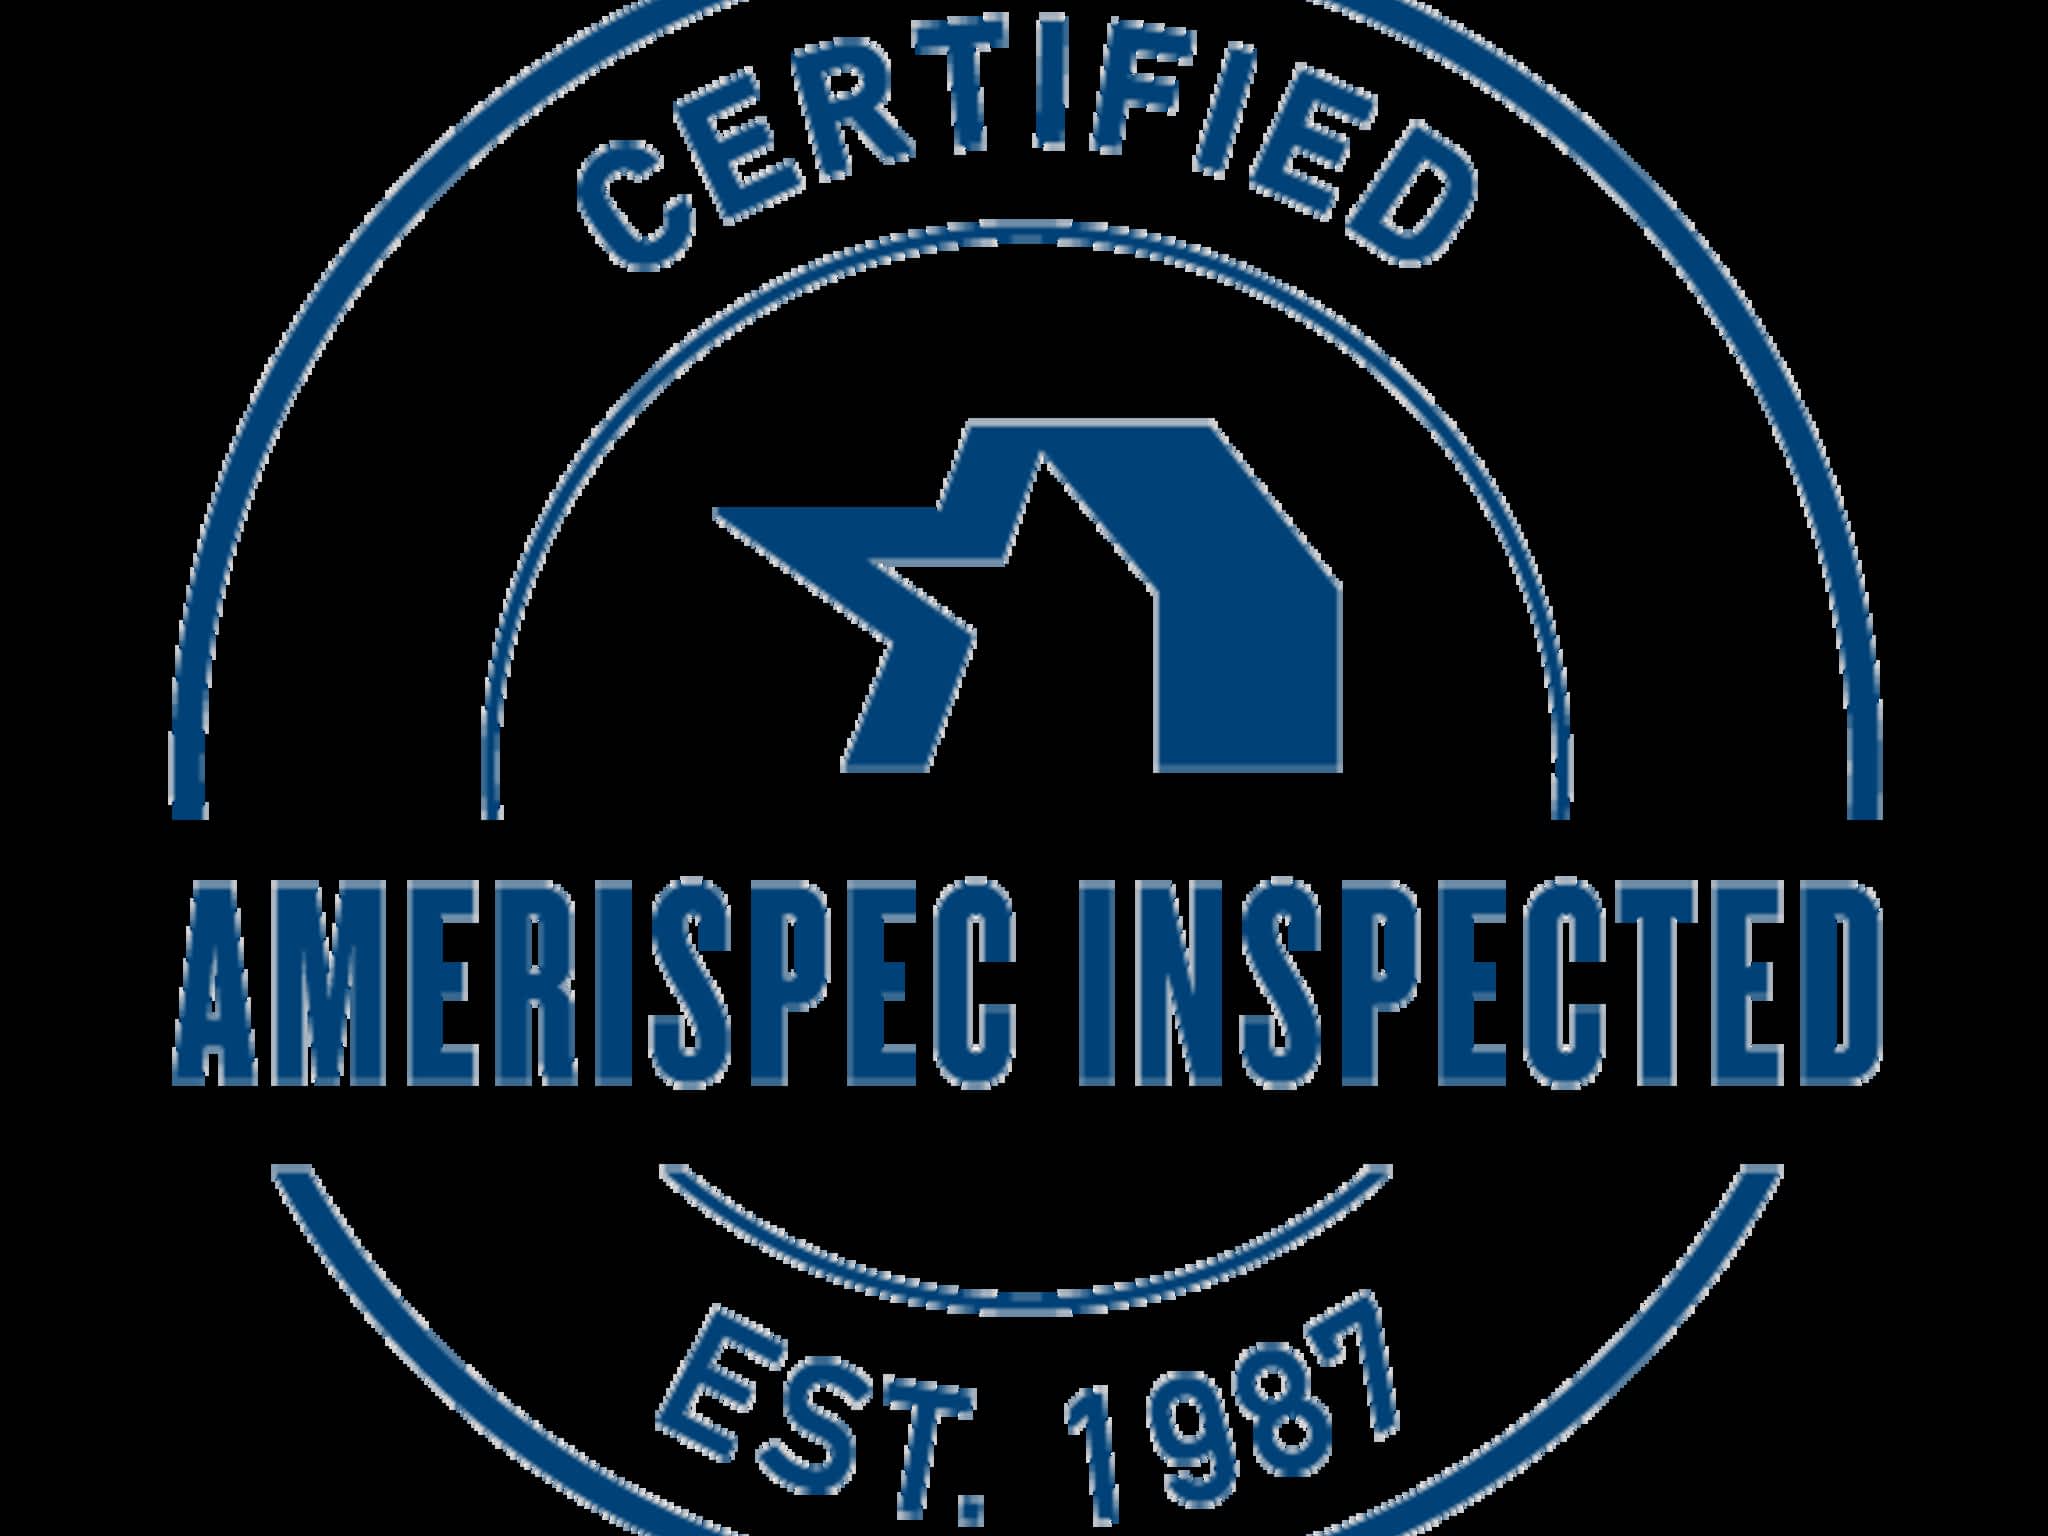 photo Amerispec Inspection Services Of Mississauga